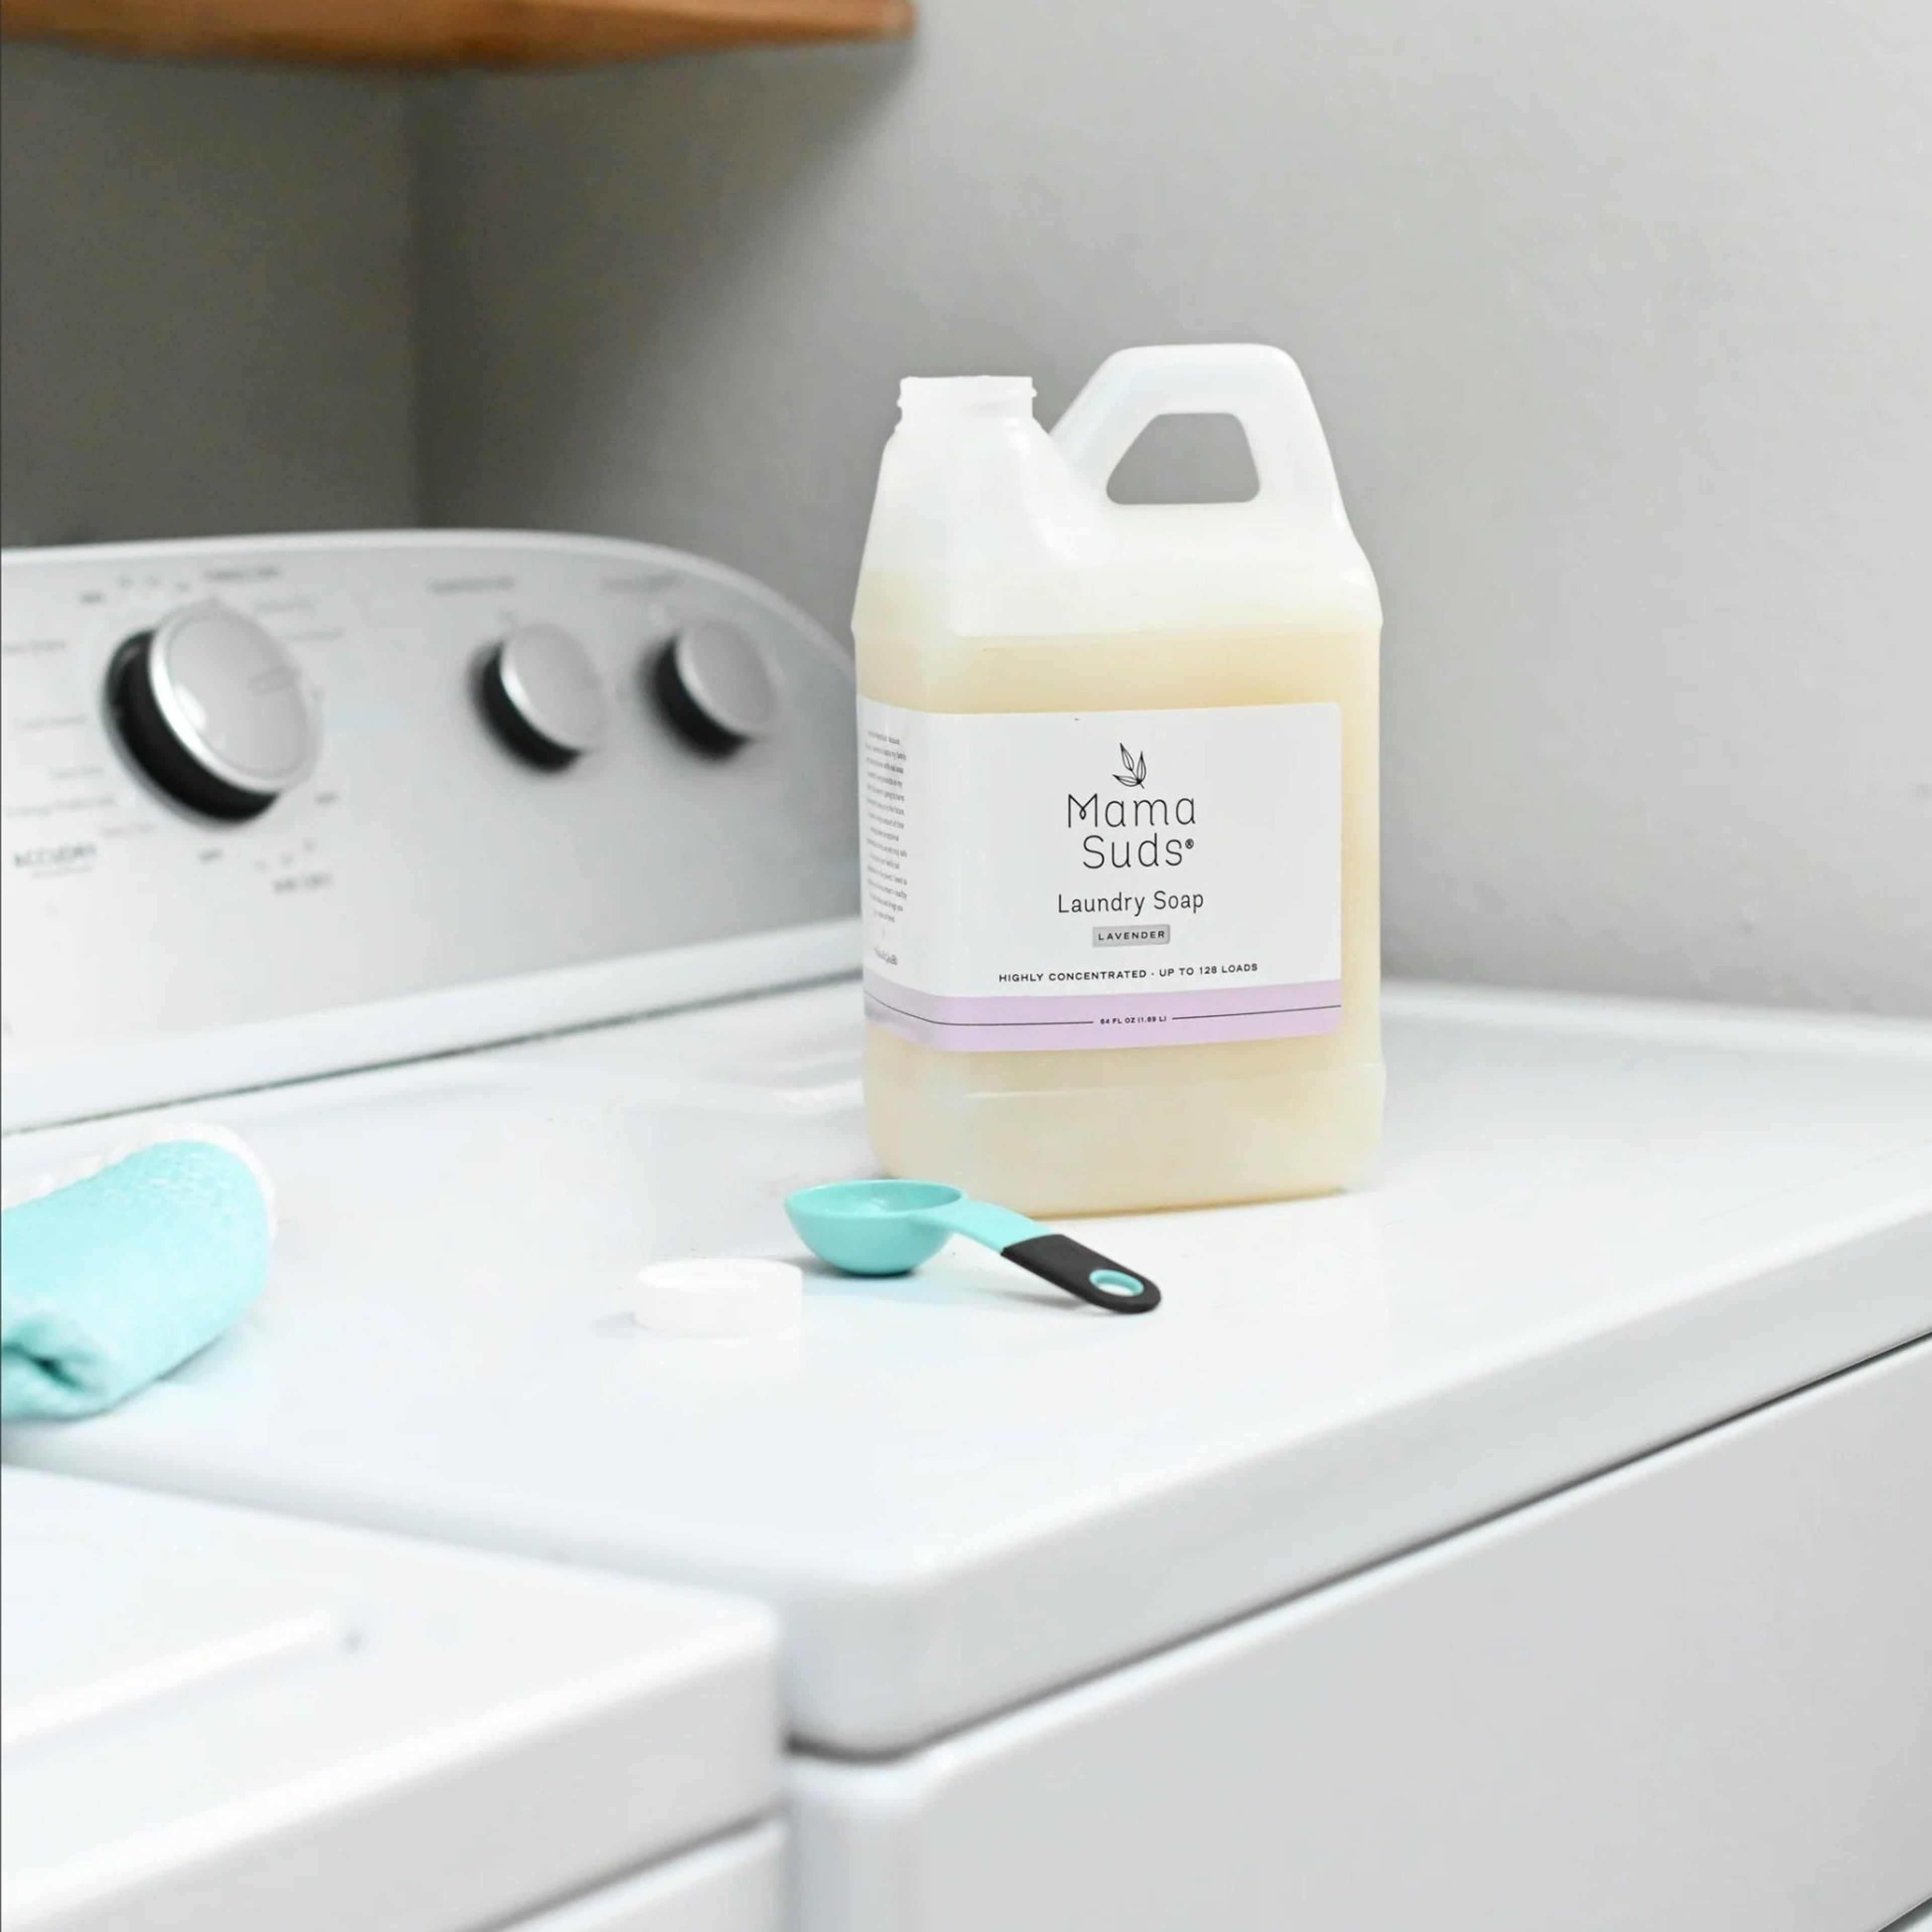 Mama Suds Lavender Laundry Detergent